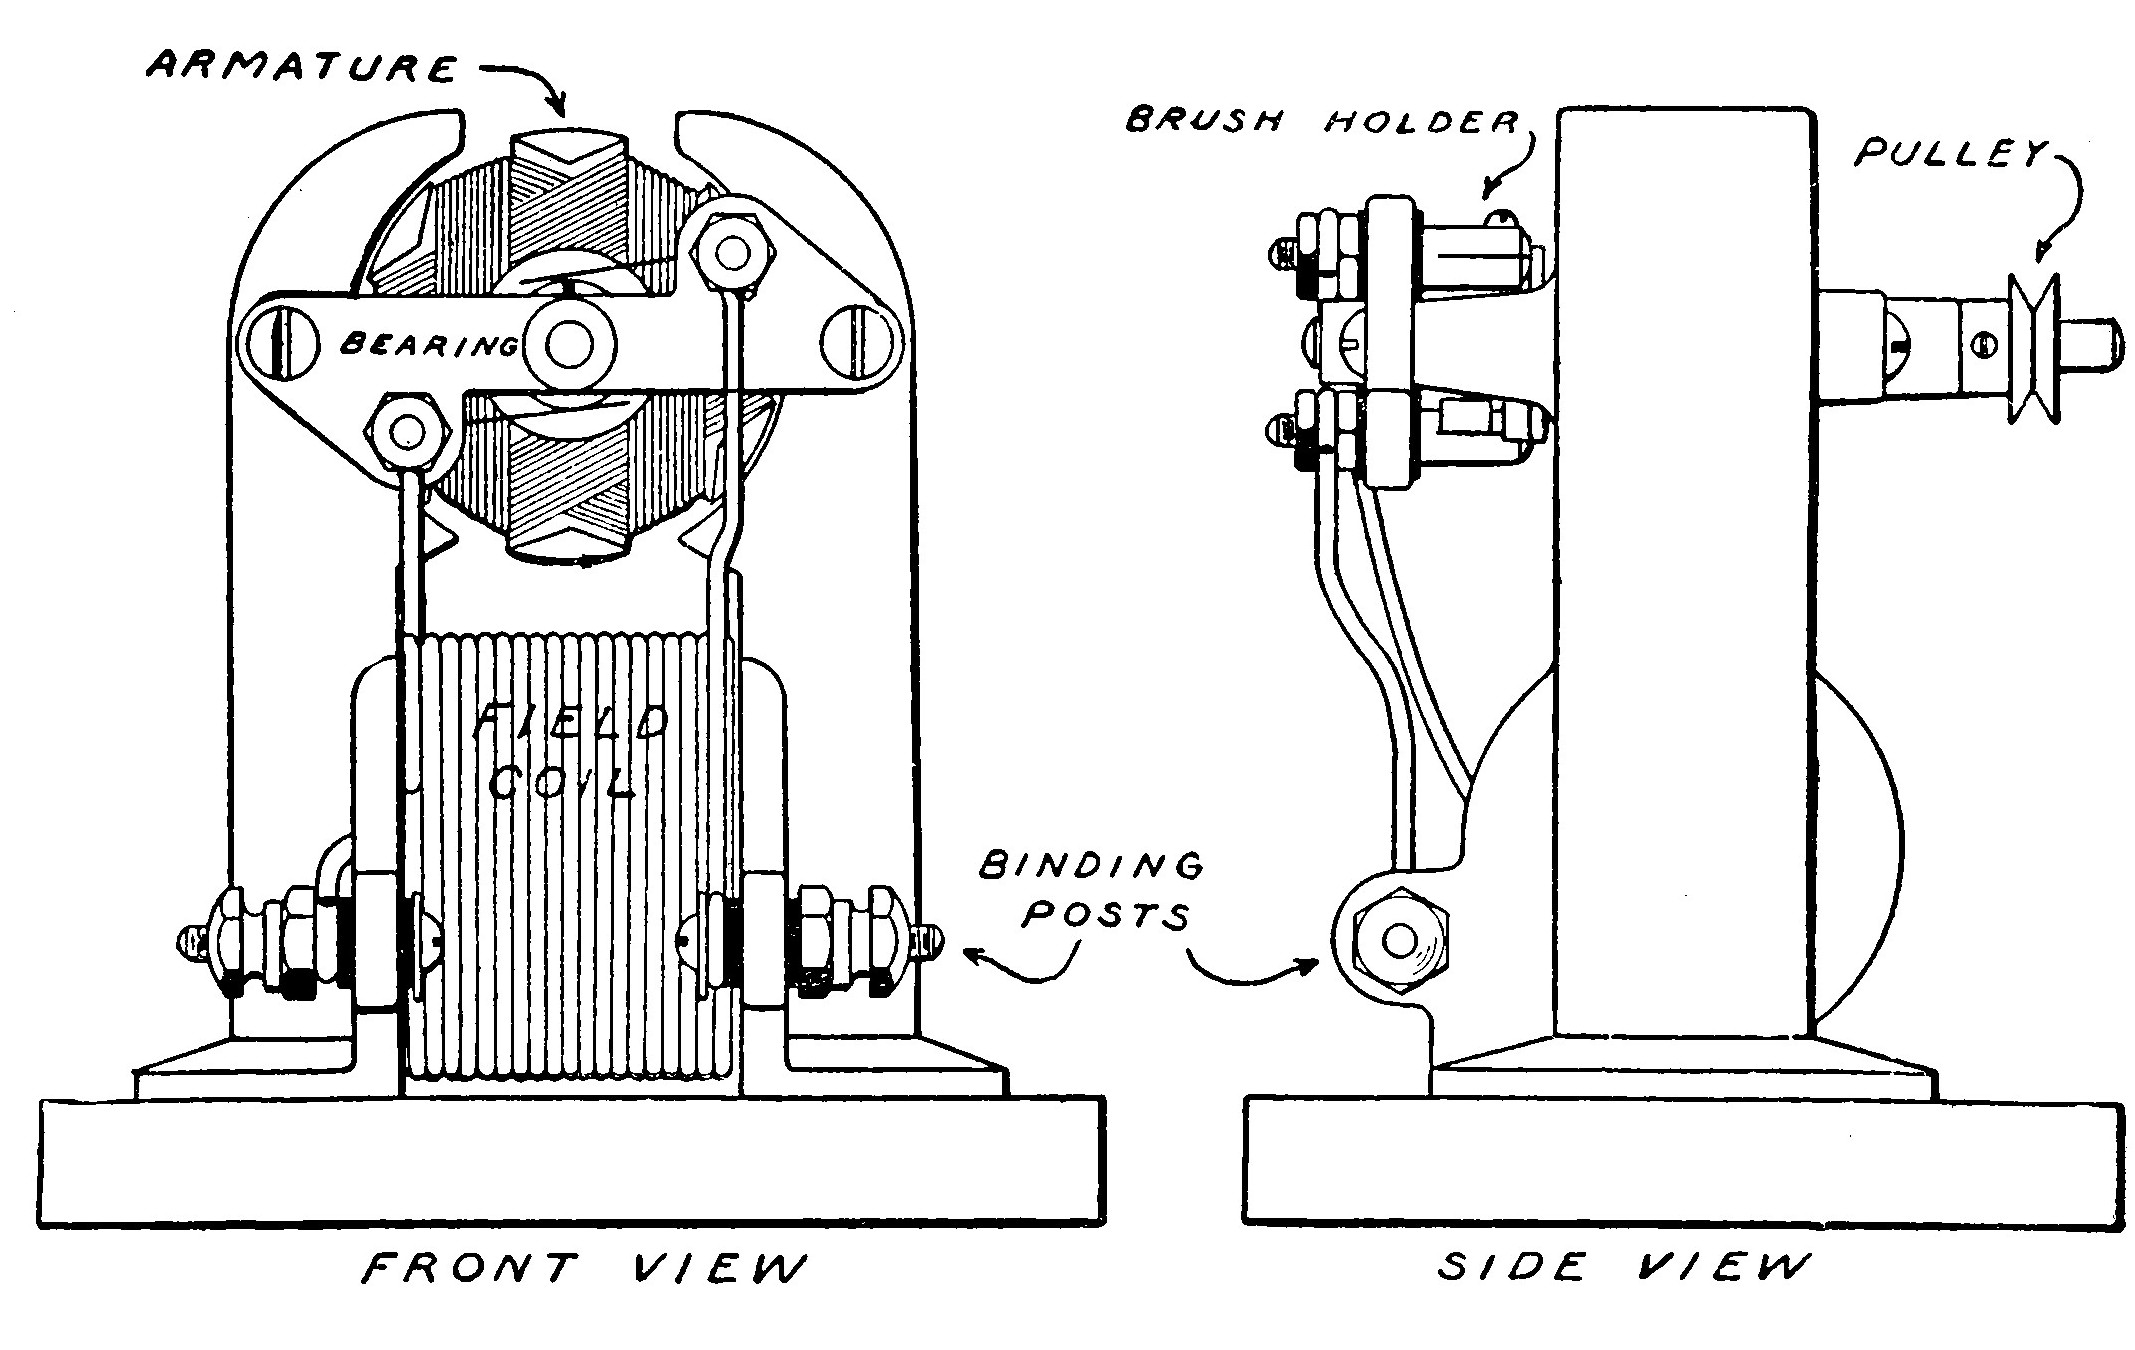 FIG. 59.—A Vertical Battery Power Motor.